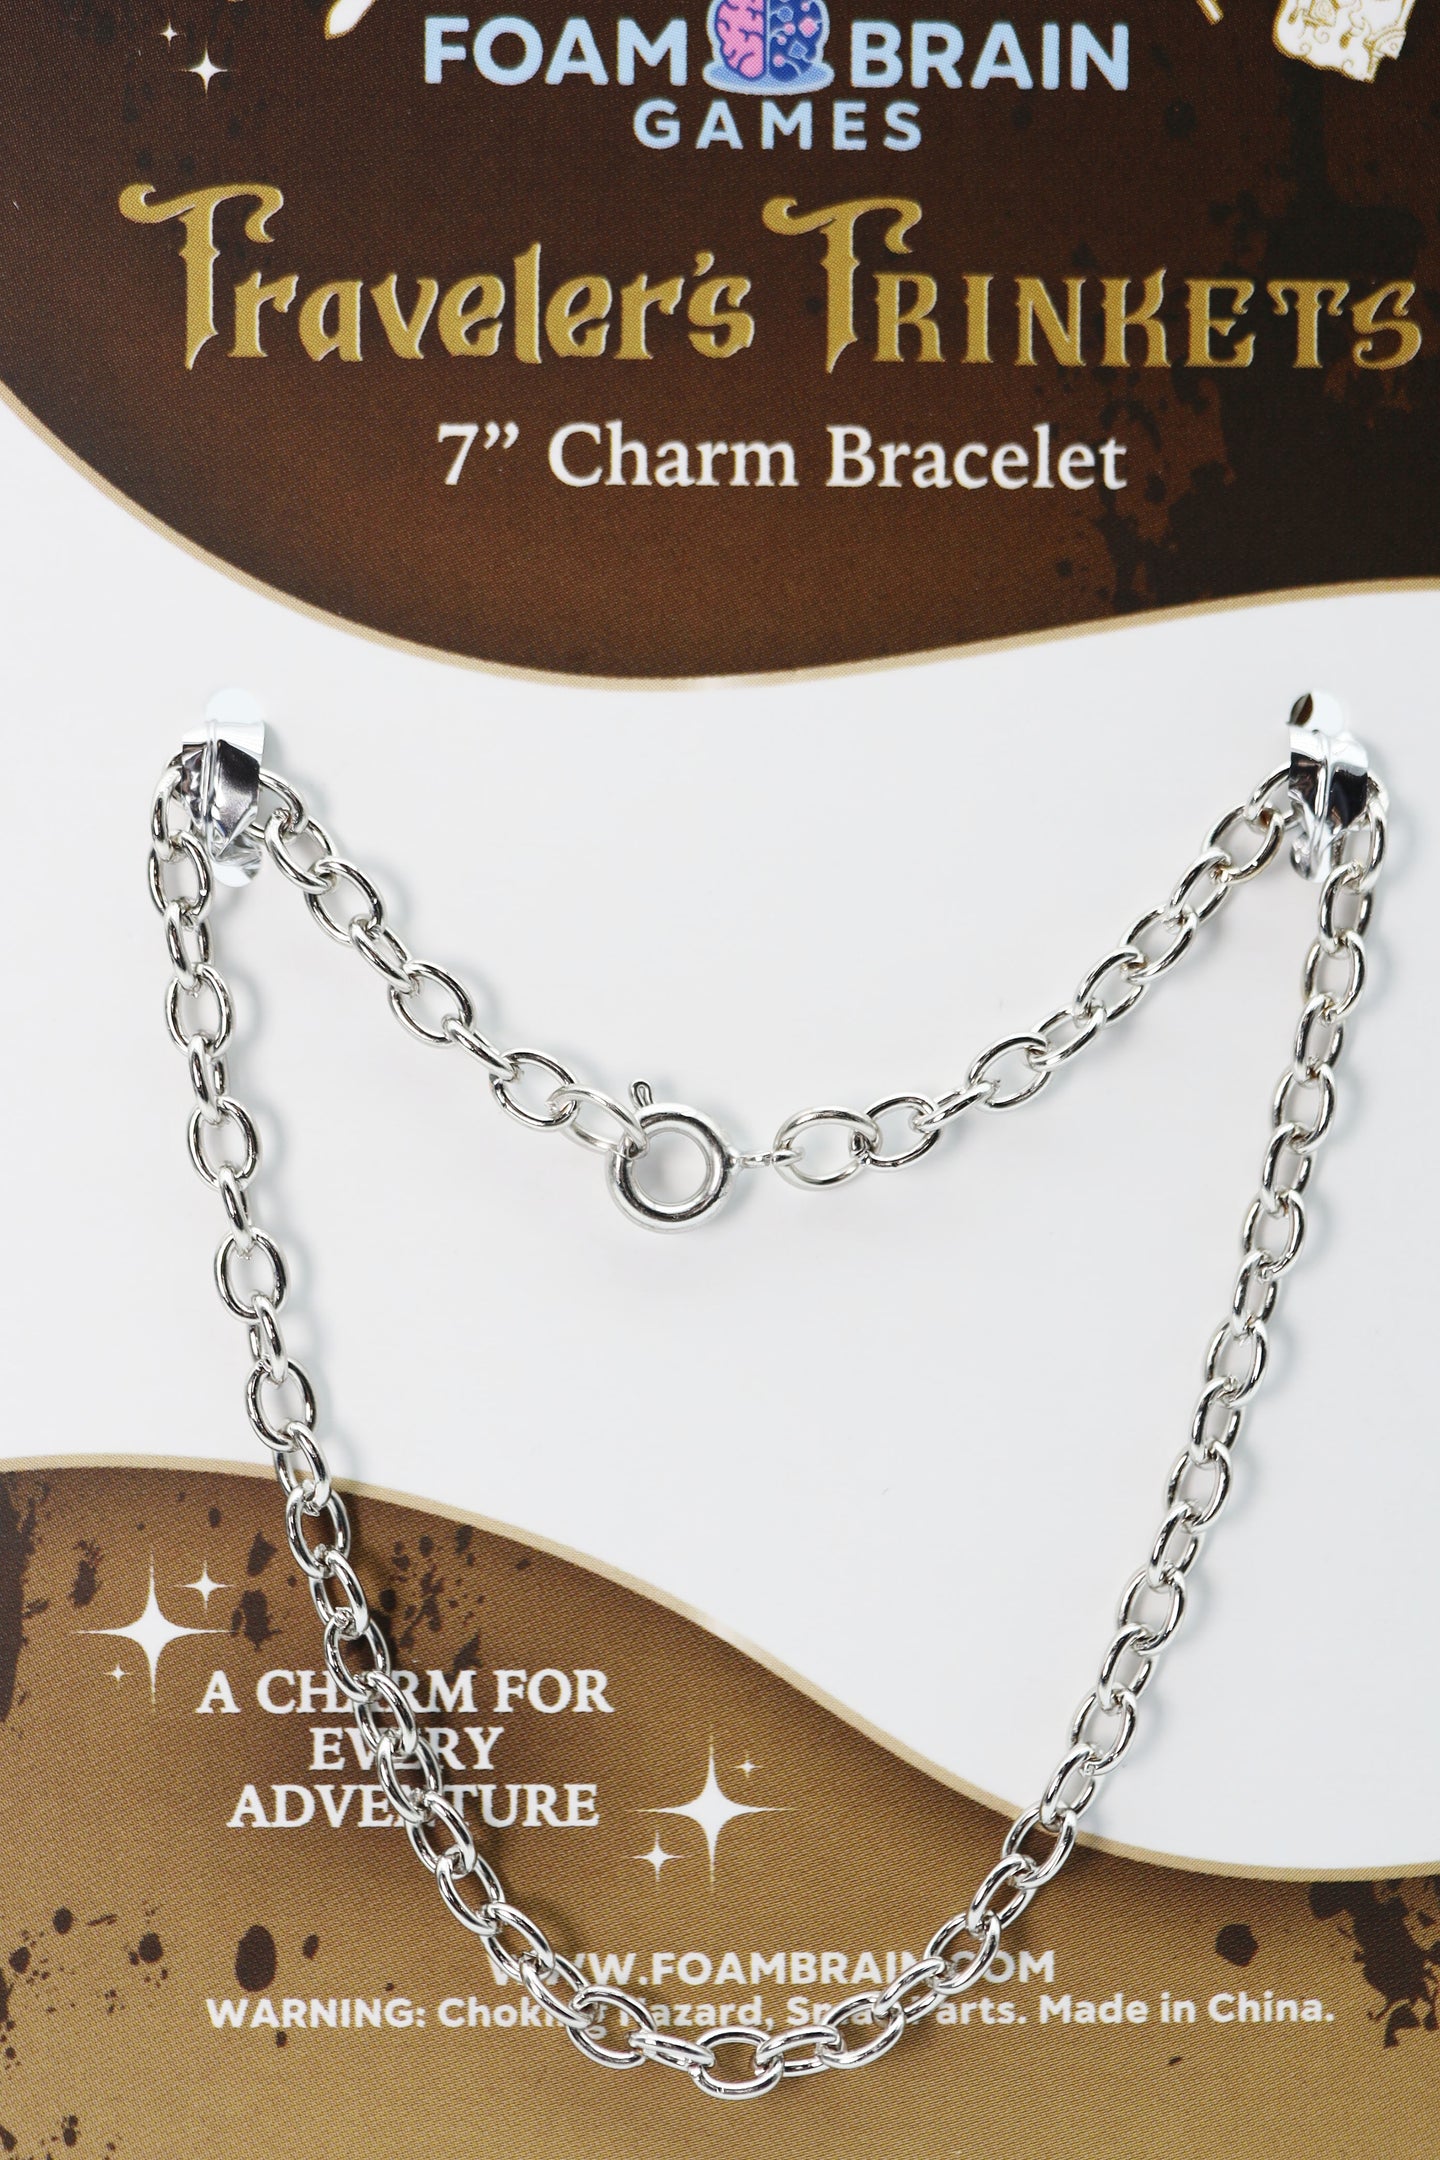 Traveler's Trinkets: 7" Charm Bracelet - Bards & Cards